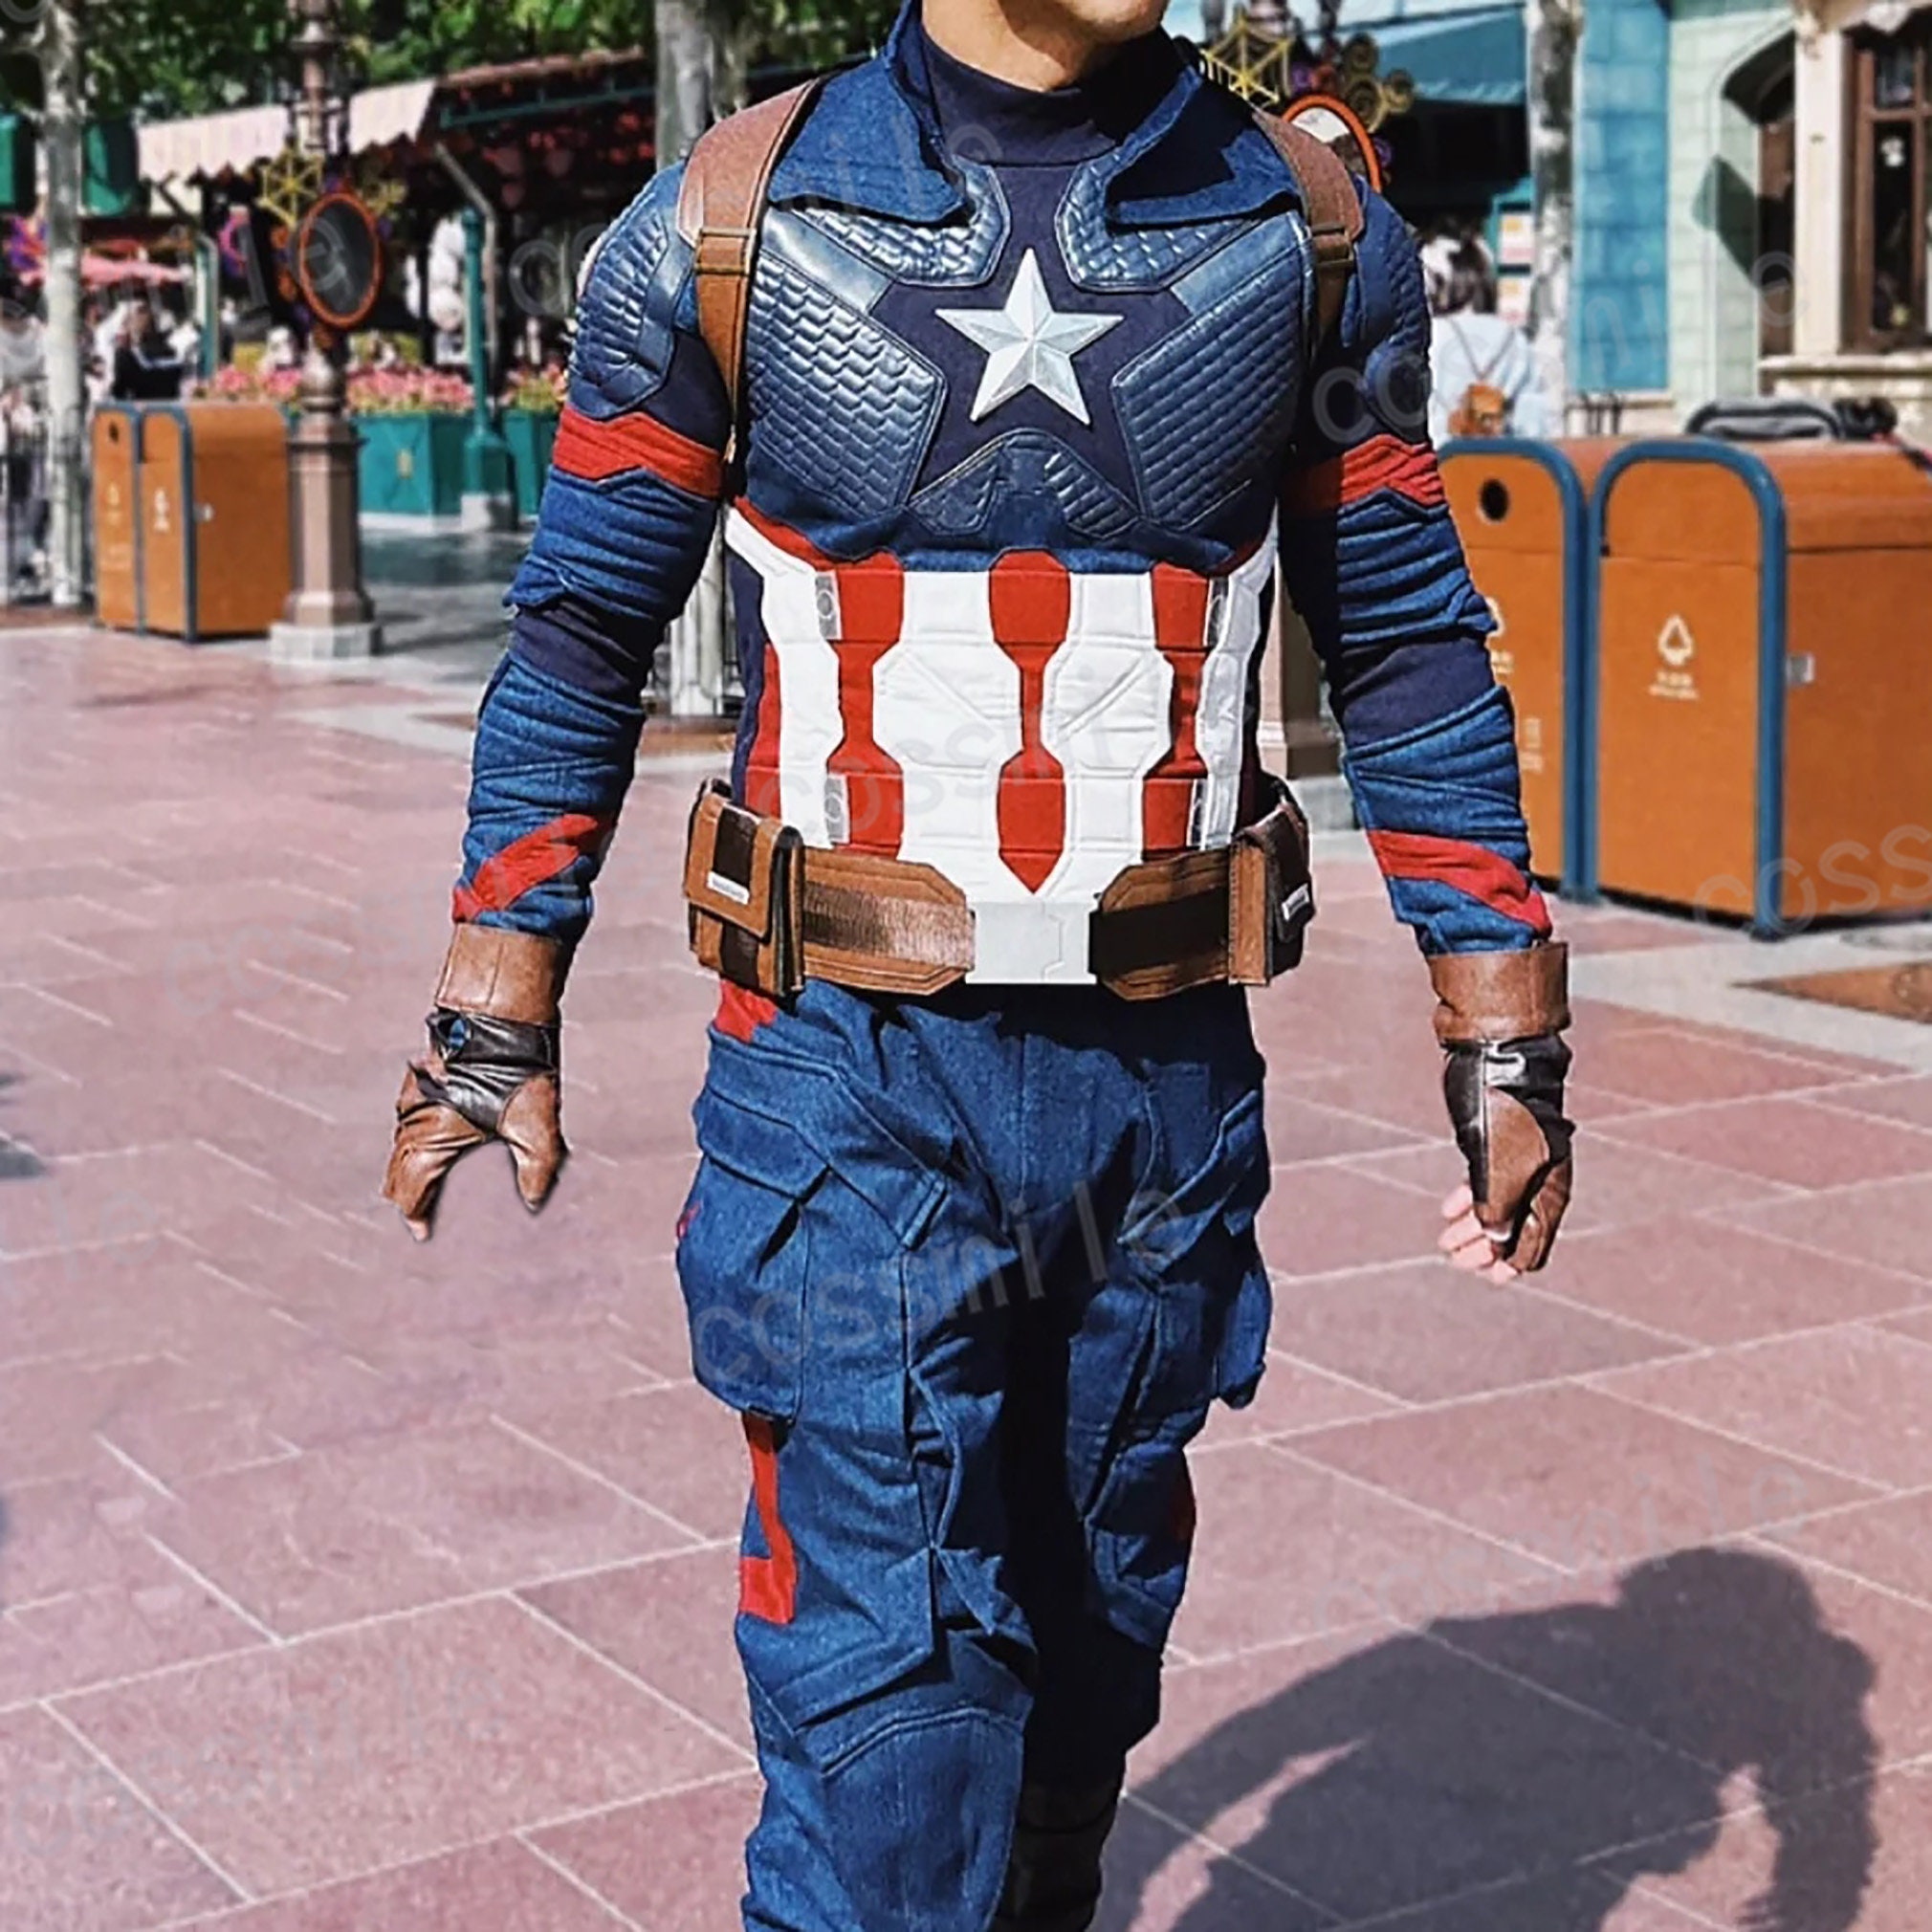 Boy's Captain America 2 Stealth Halloween Costume 